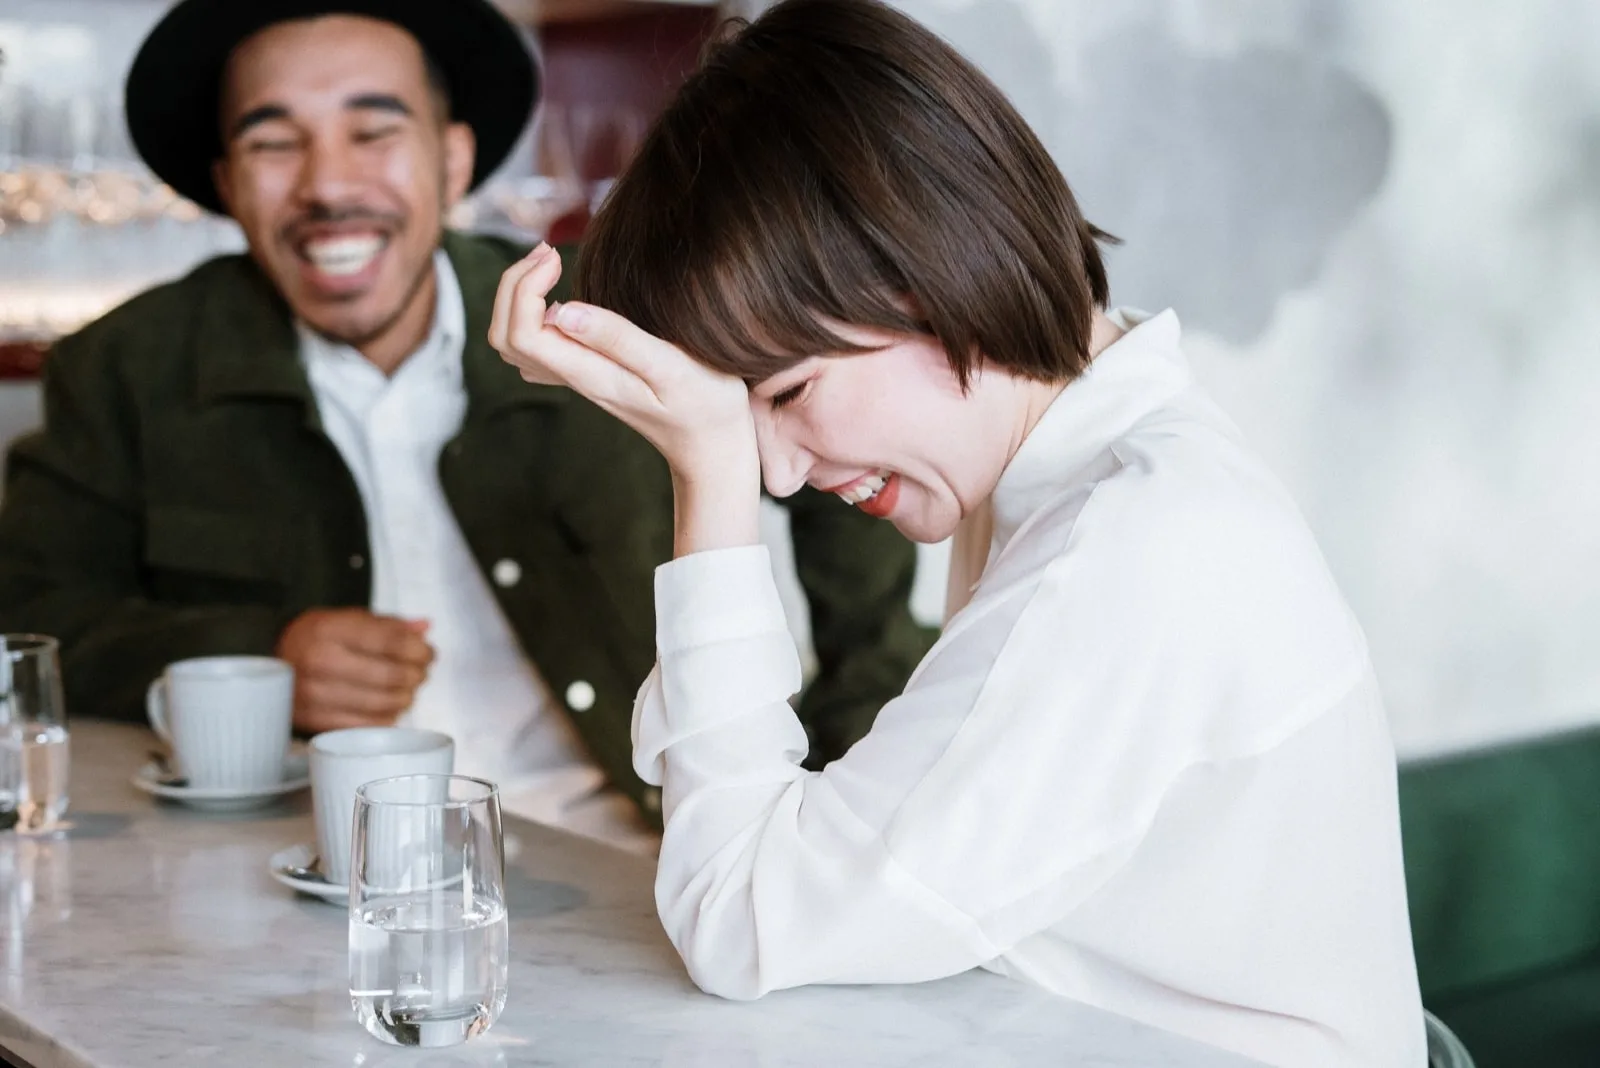 woman in white shirt laughing while sitting near man